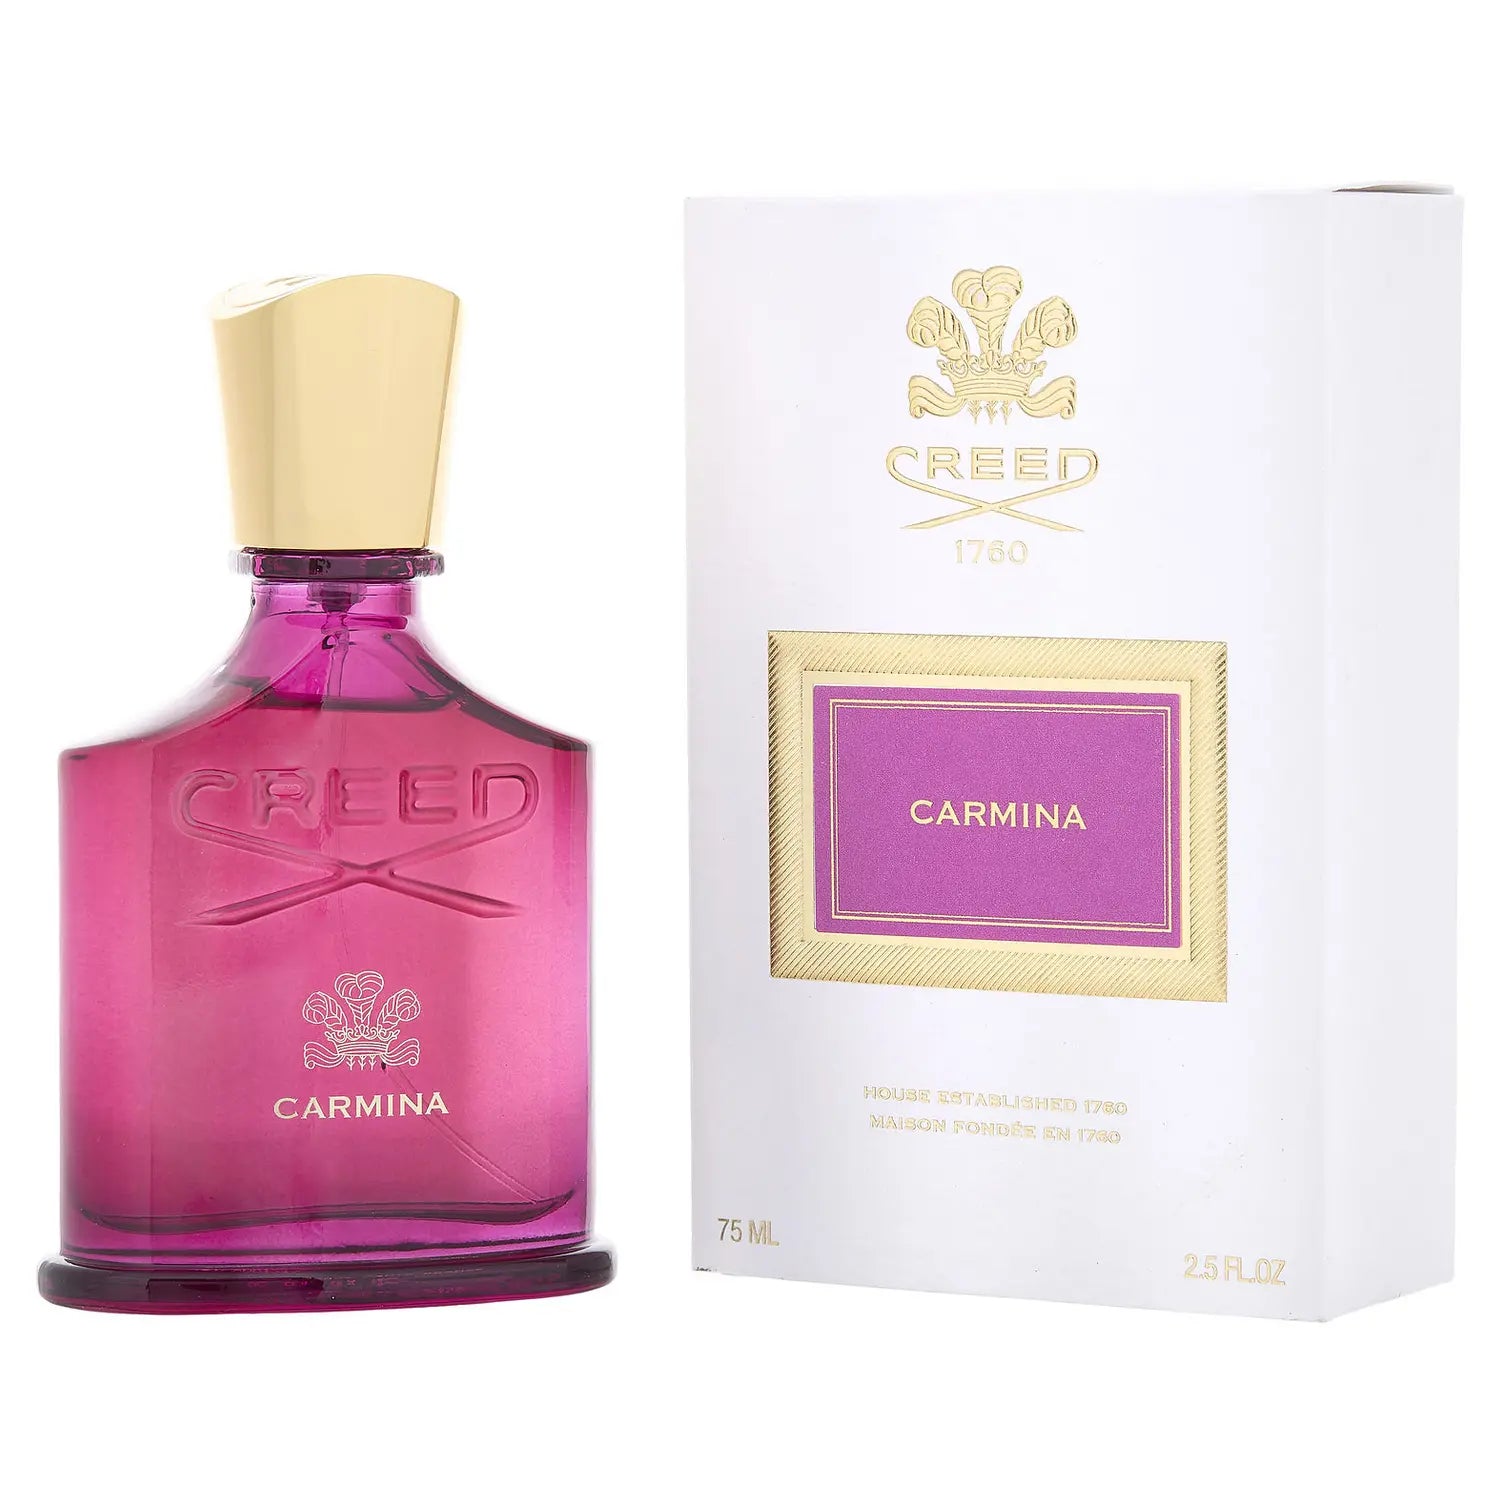 Carmina by Creed 2.5 oz EDP Spray for Women